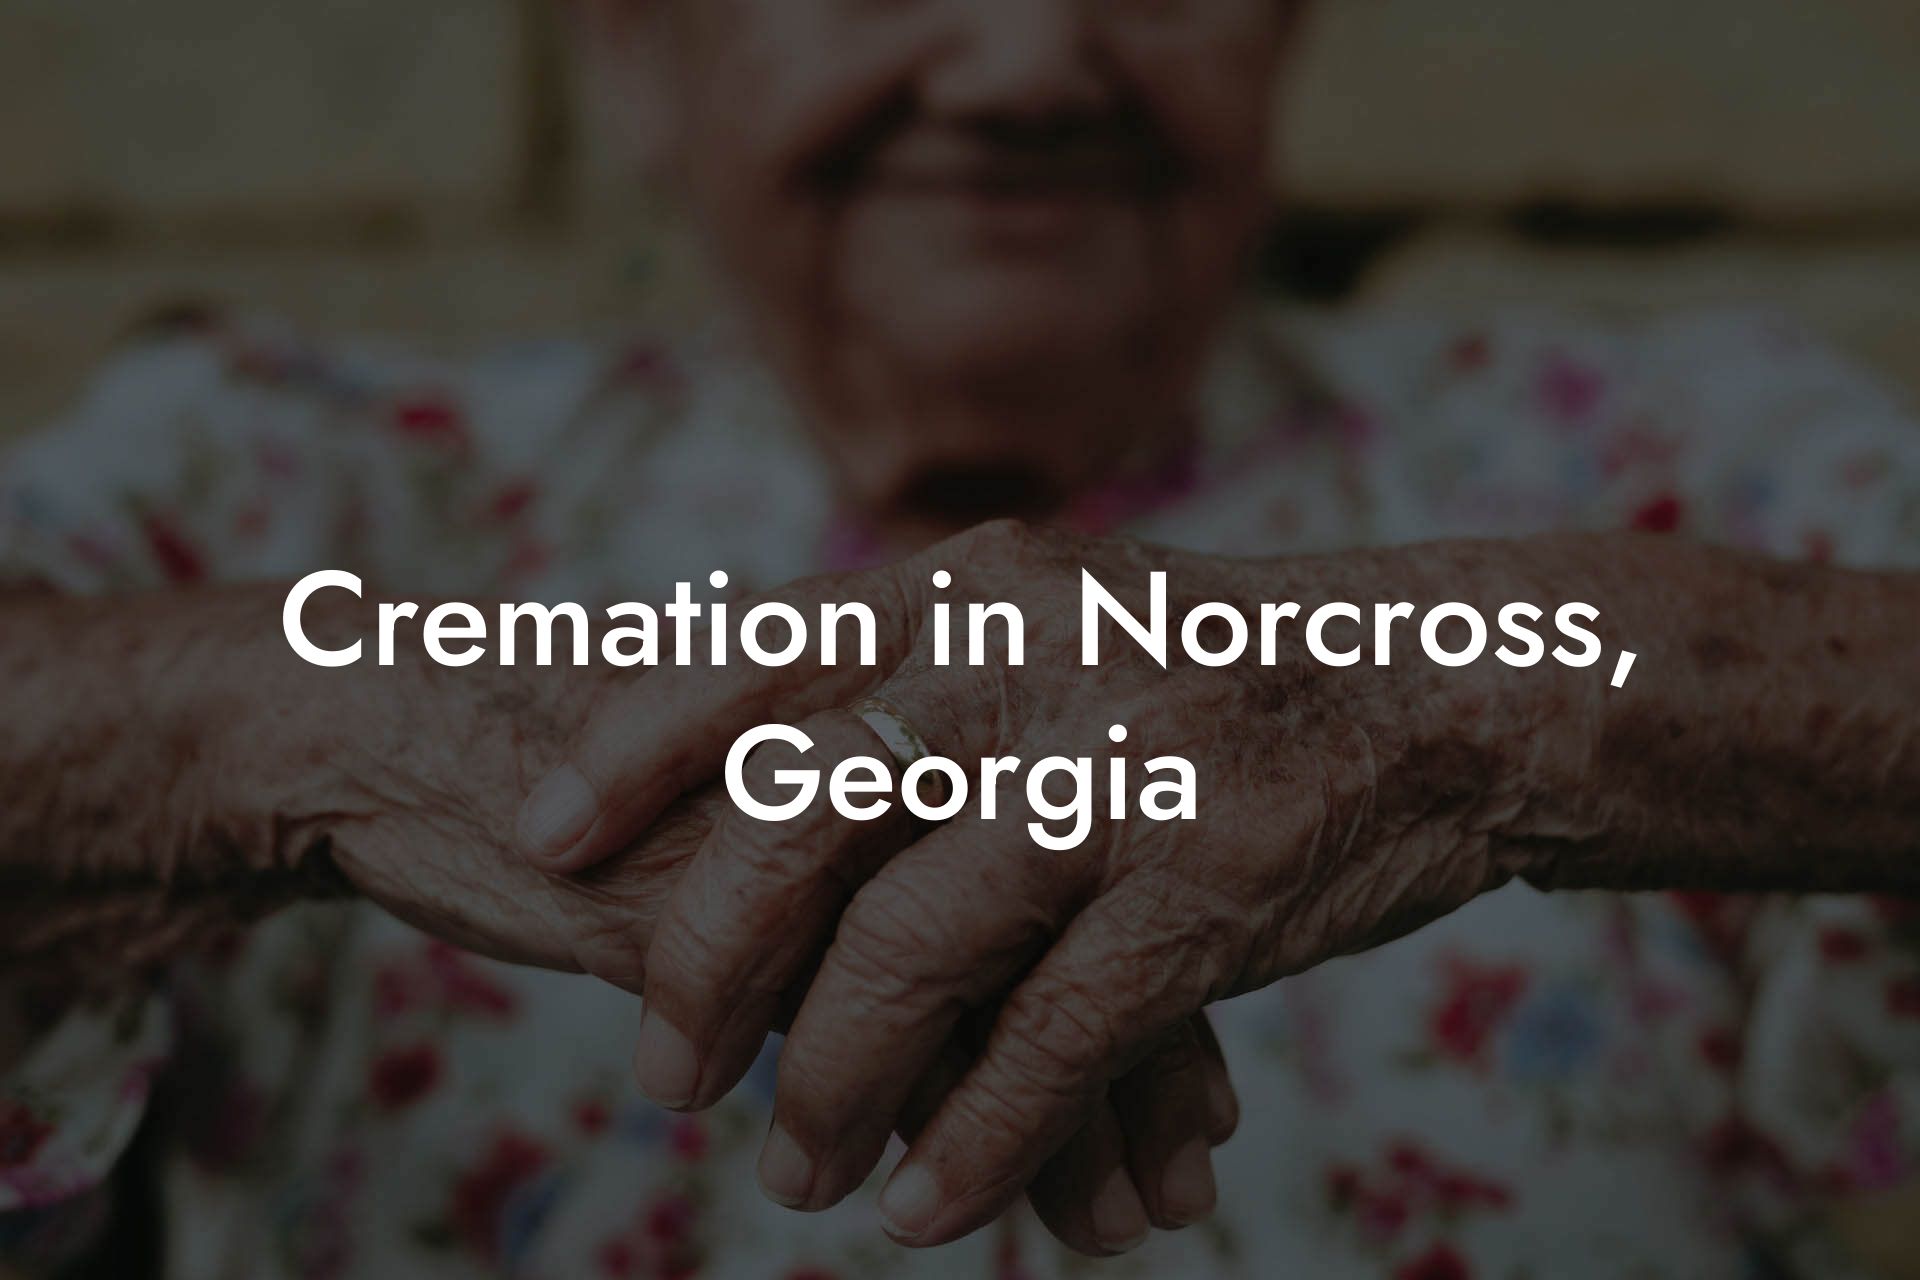 Cremation in Norcross, Georgia